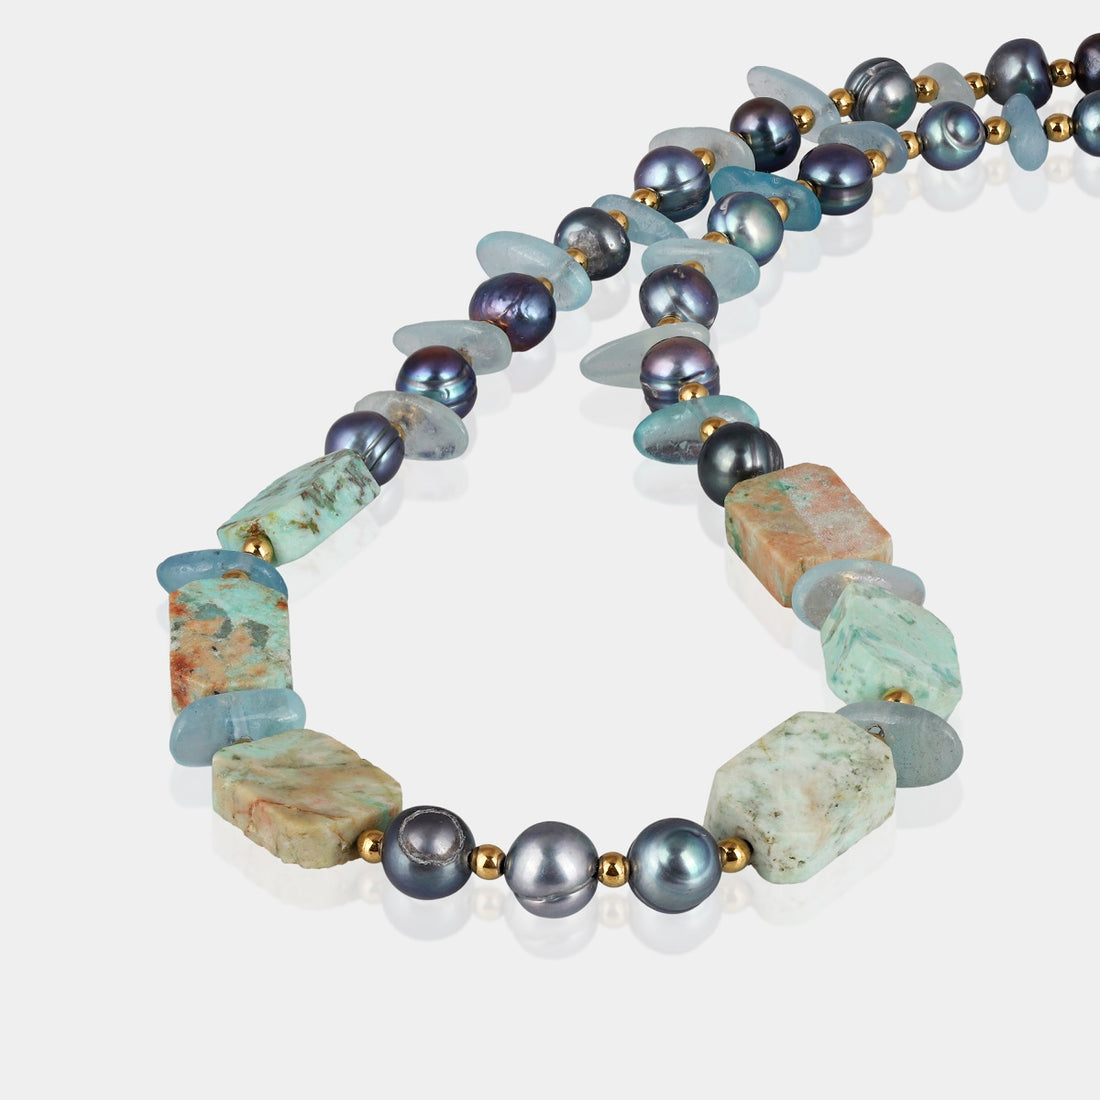 Handmade 925 Silver Necklace with Aquamarine Gemstone Beads